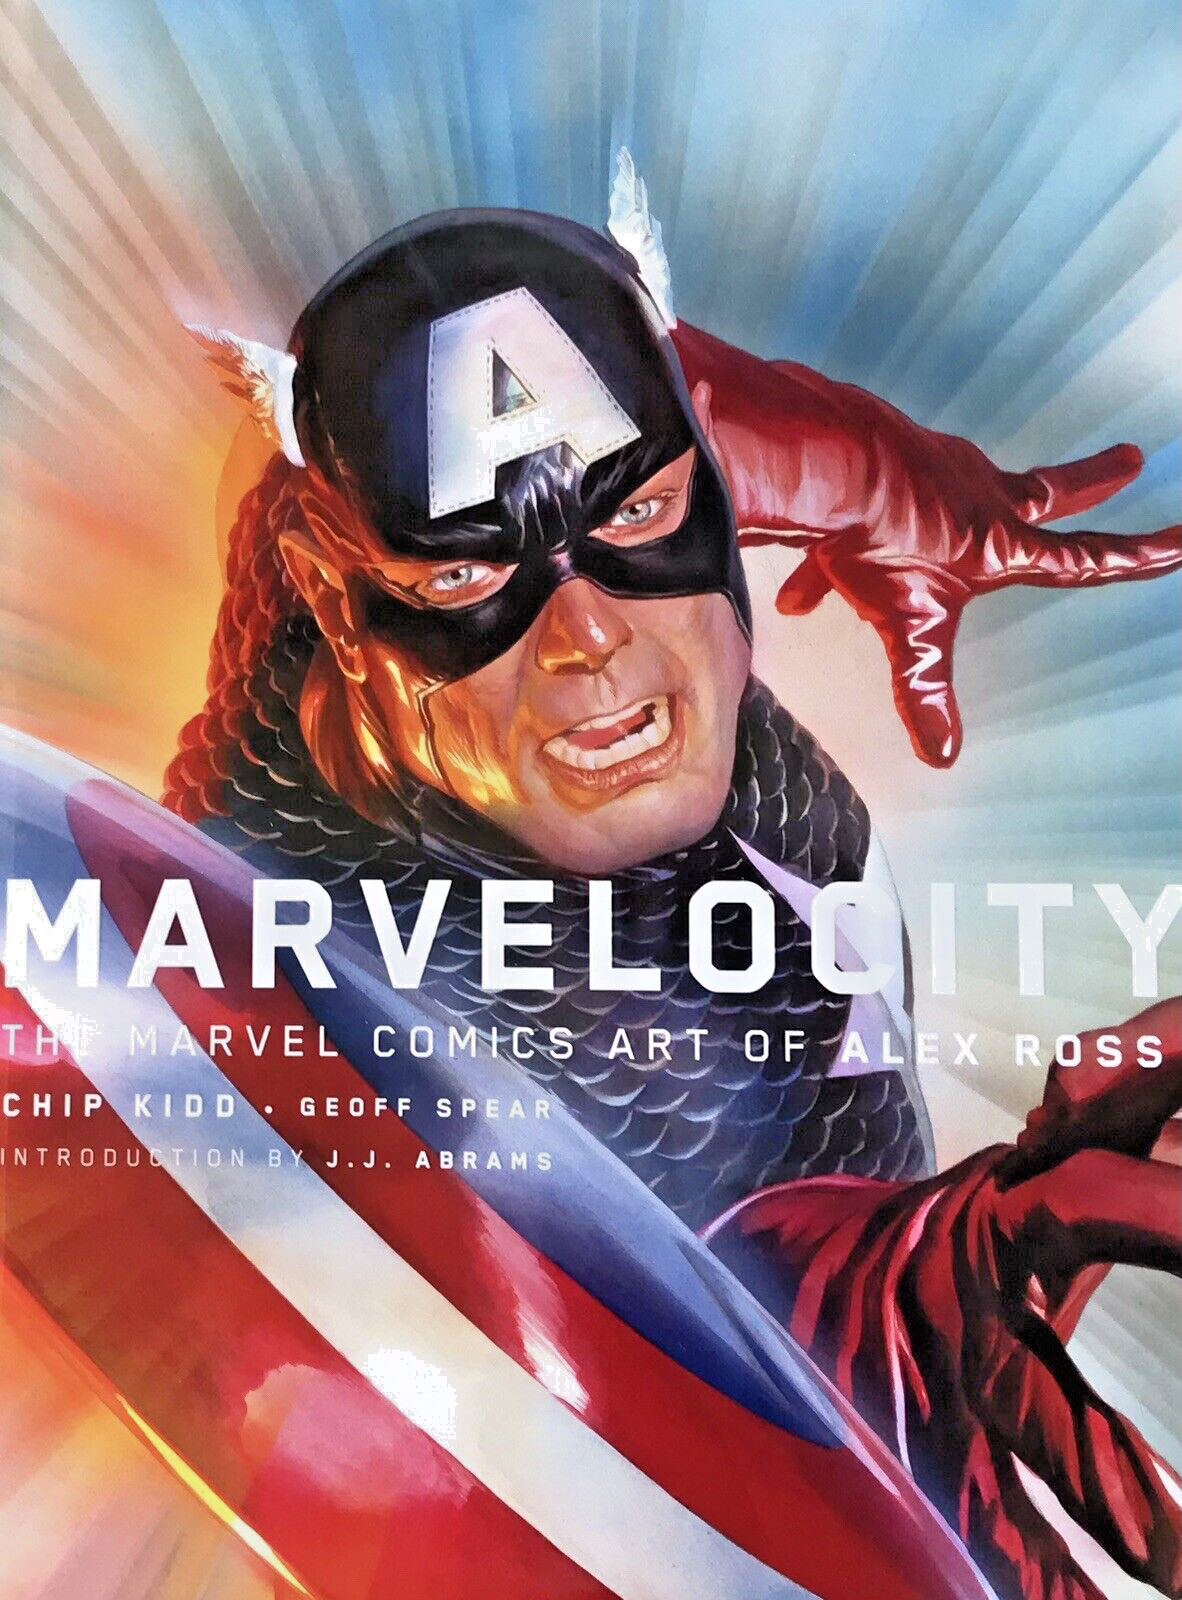 Marvelocity The Marvel Comics Art of Alex Ross,Chip Kidd,Geoff Spear & Abrams